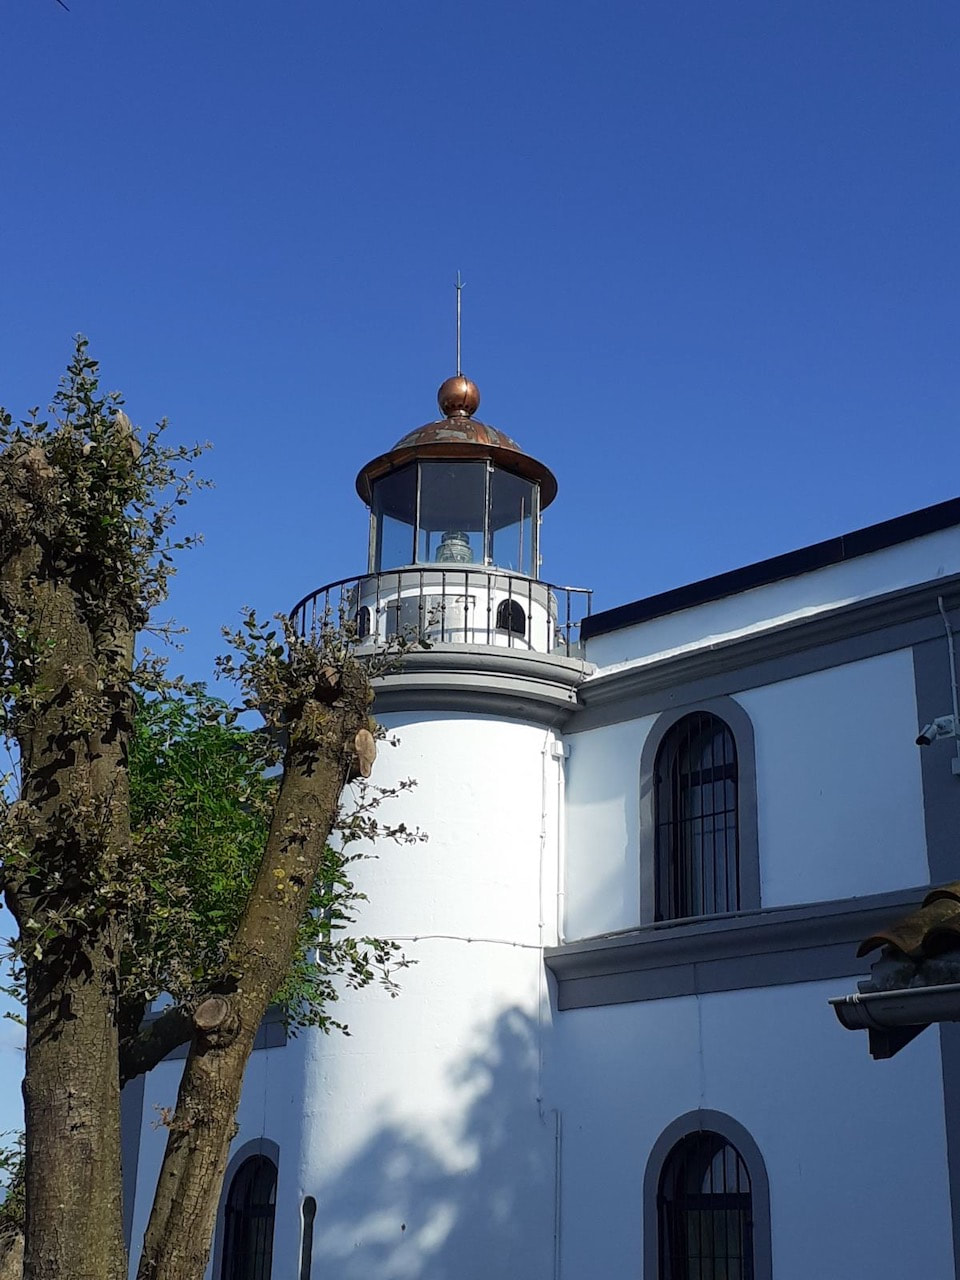 The Sta. Clara Island Lighthouse